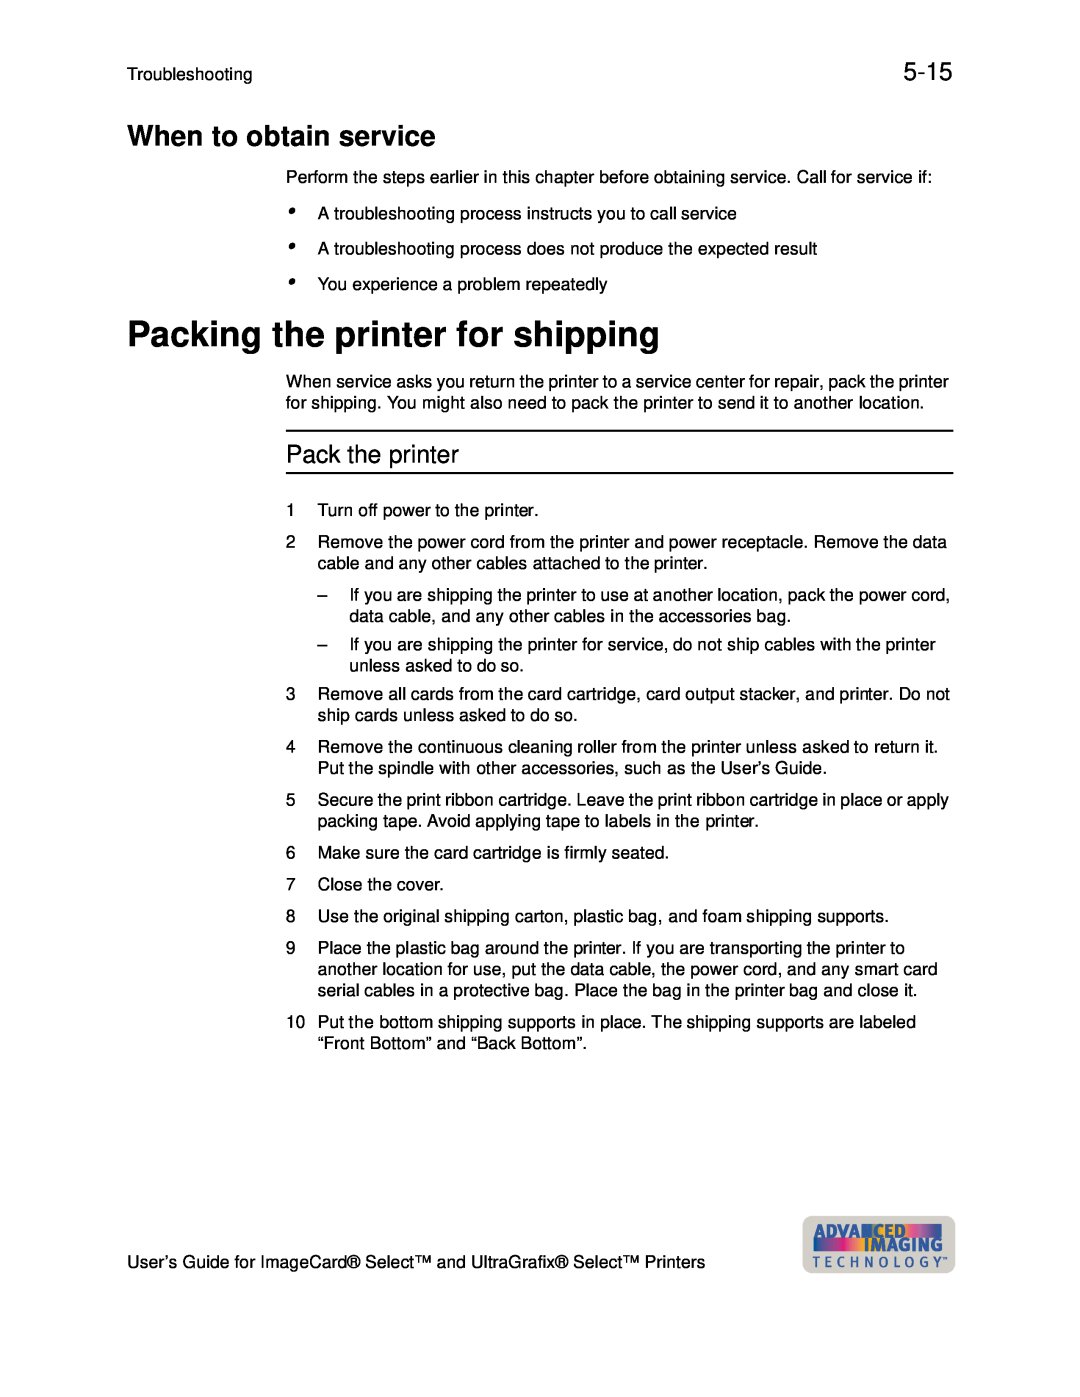 Datacard Group ImageCard SelectTM and UltraGrafix SelectTM Printers manual Packing the printer for shipping, 5-15 